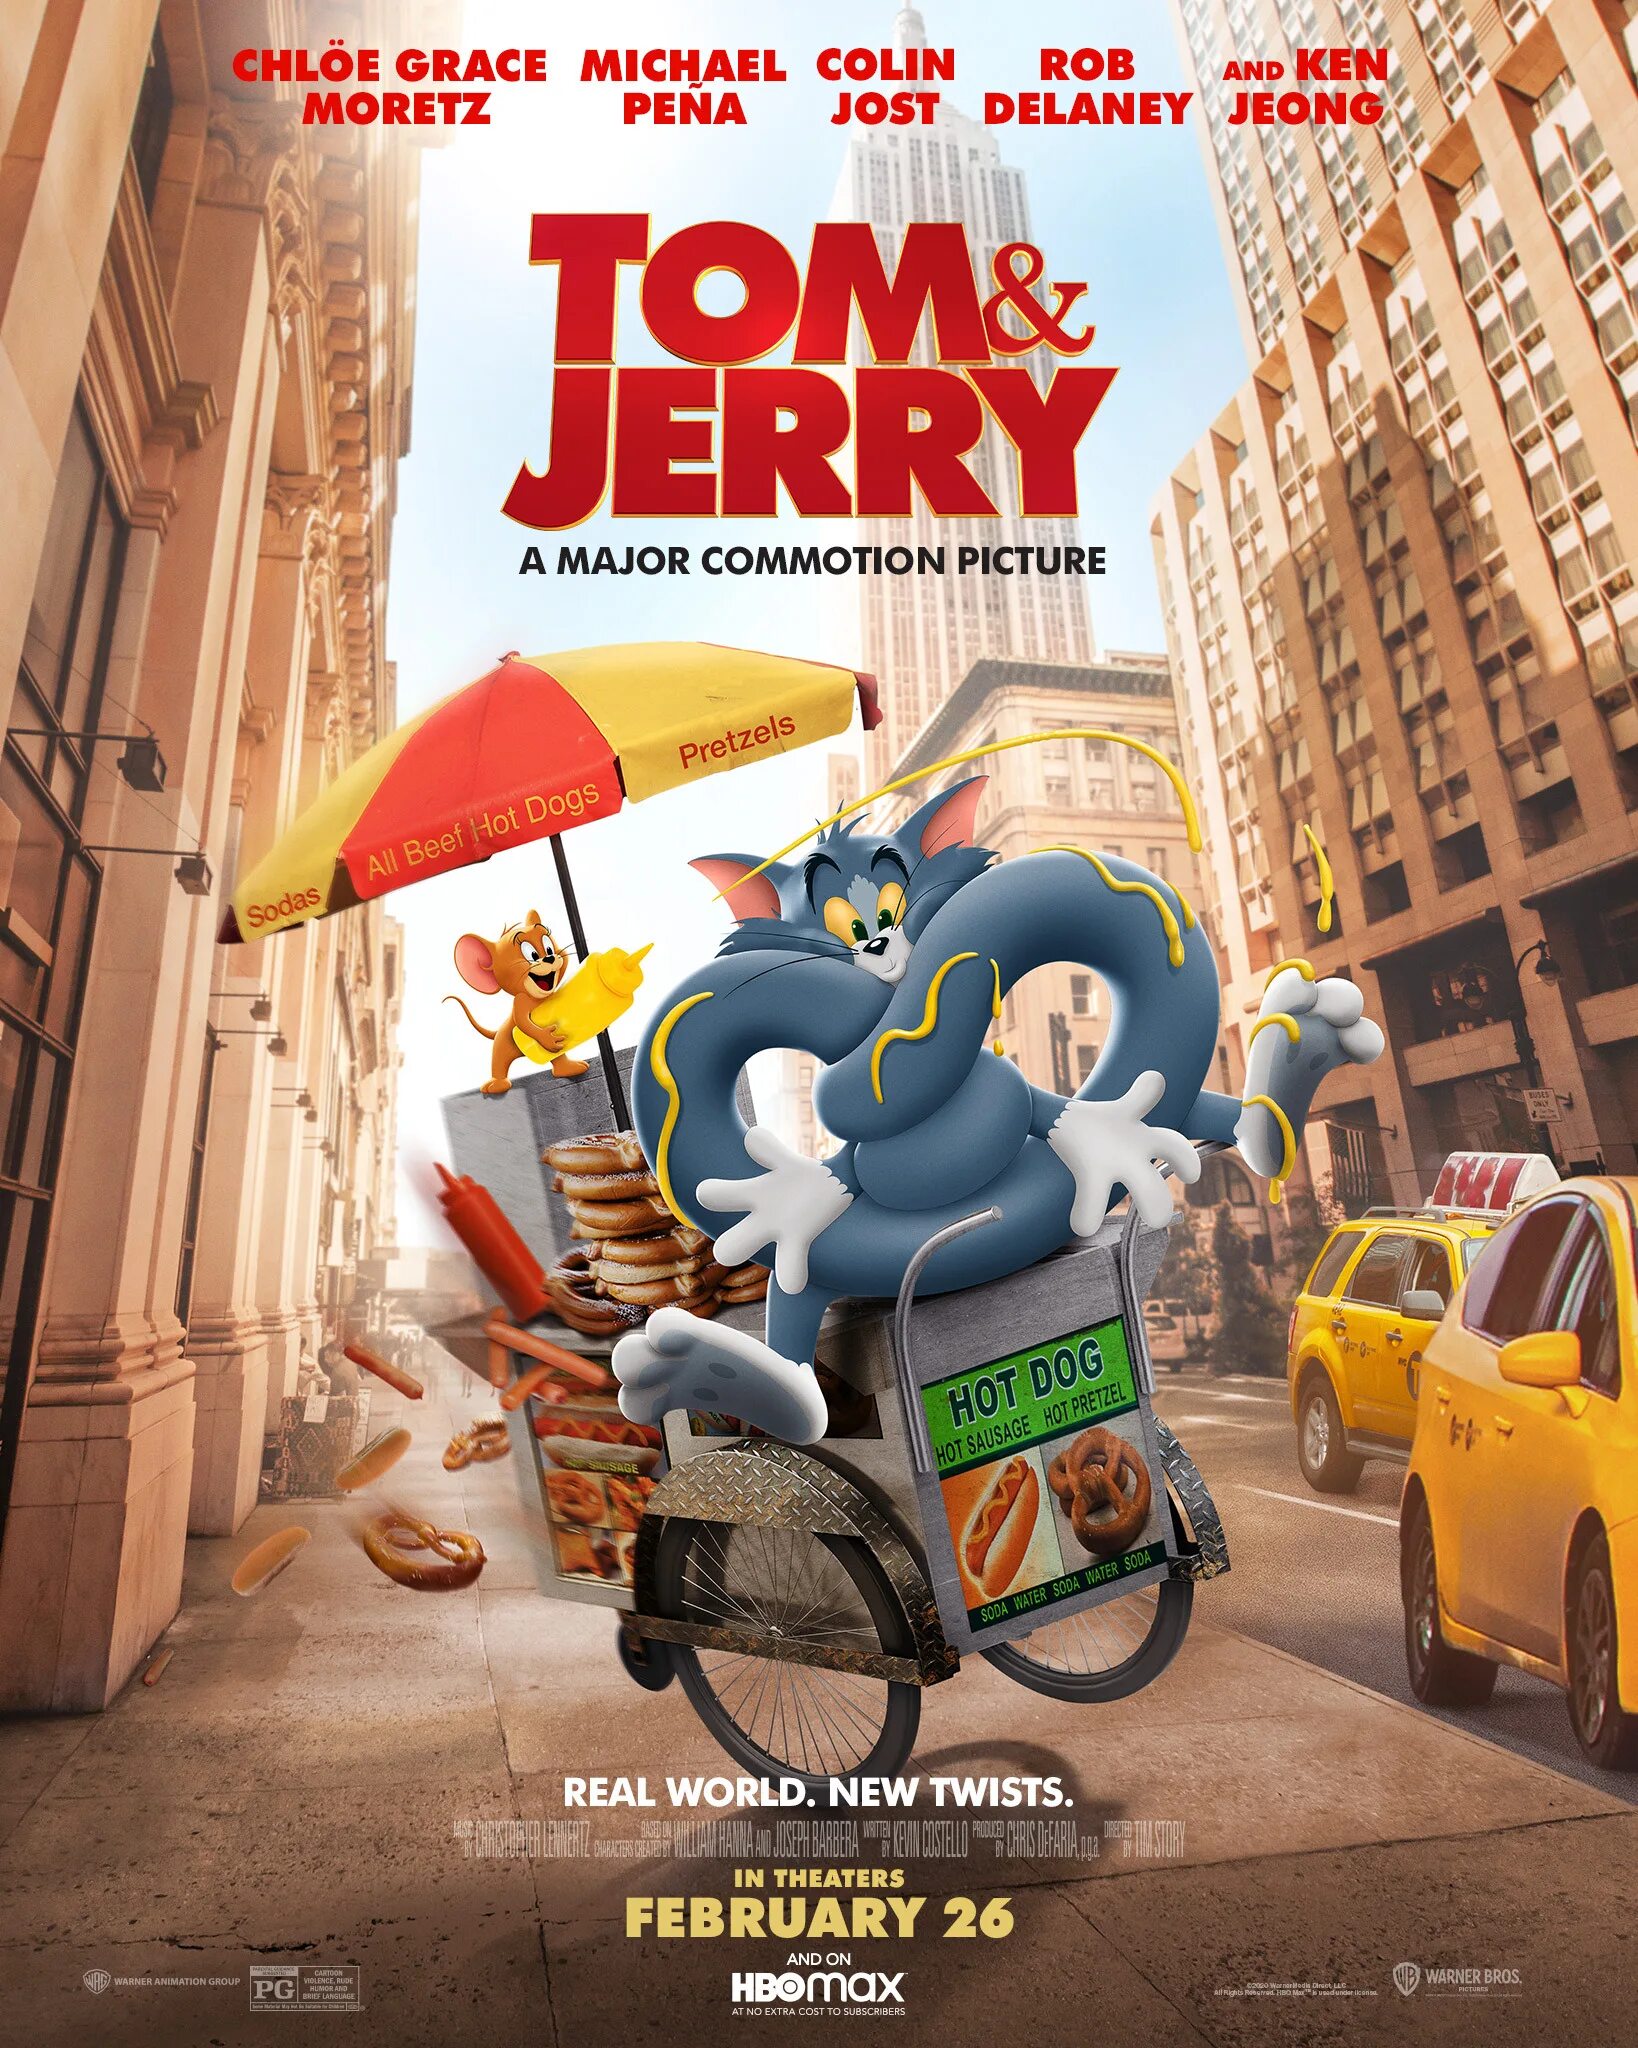 Tom and Jerry 2021. Том и Джерри 2021 poster. Режиссер тома и джерри